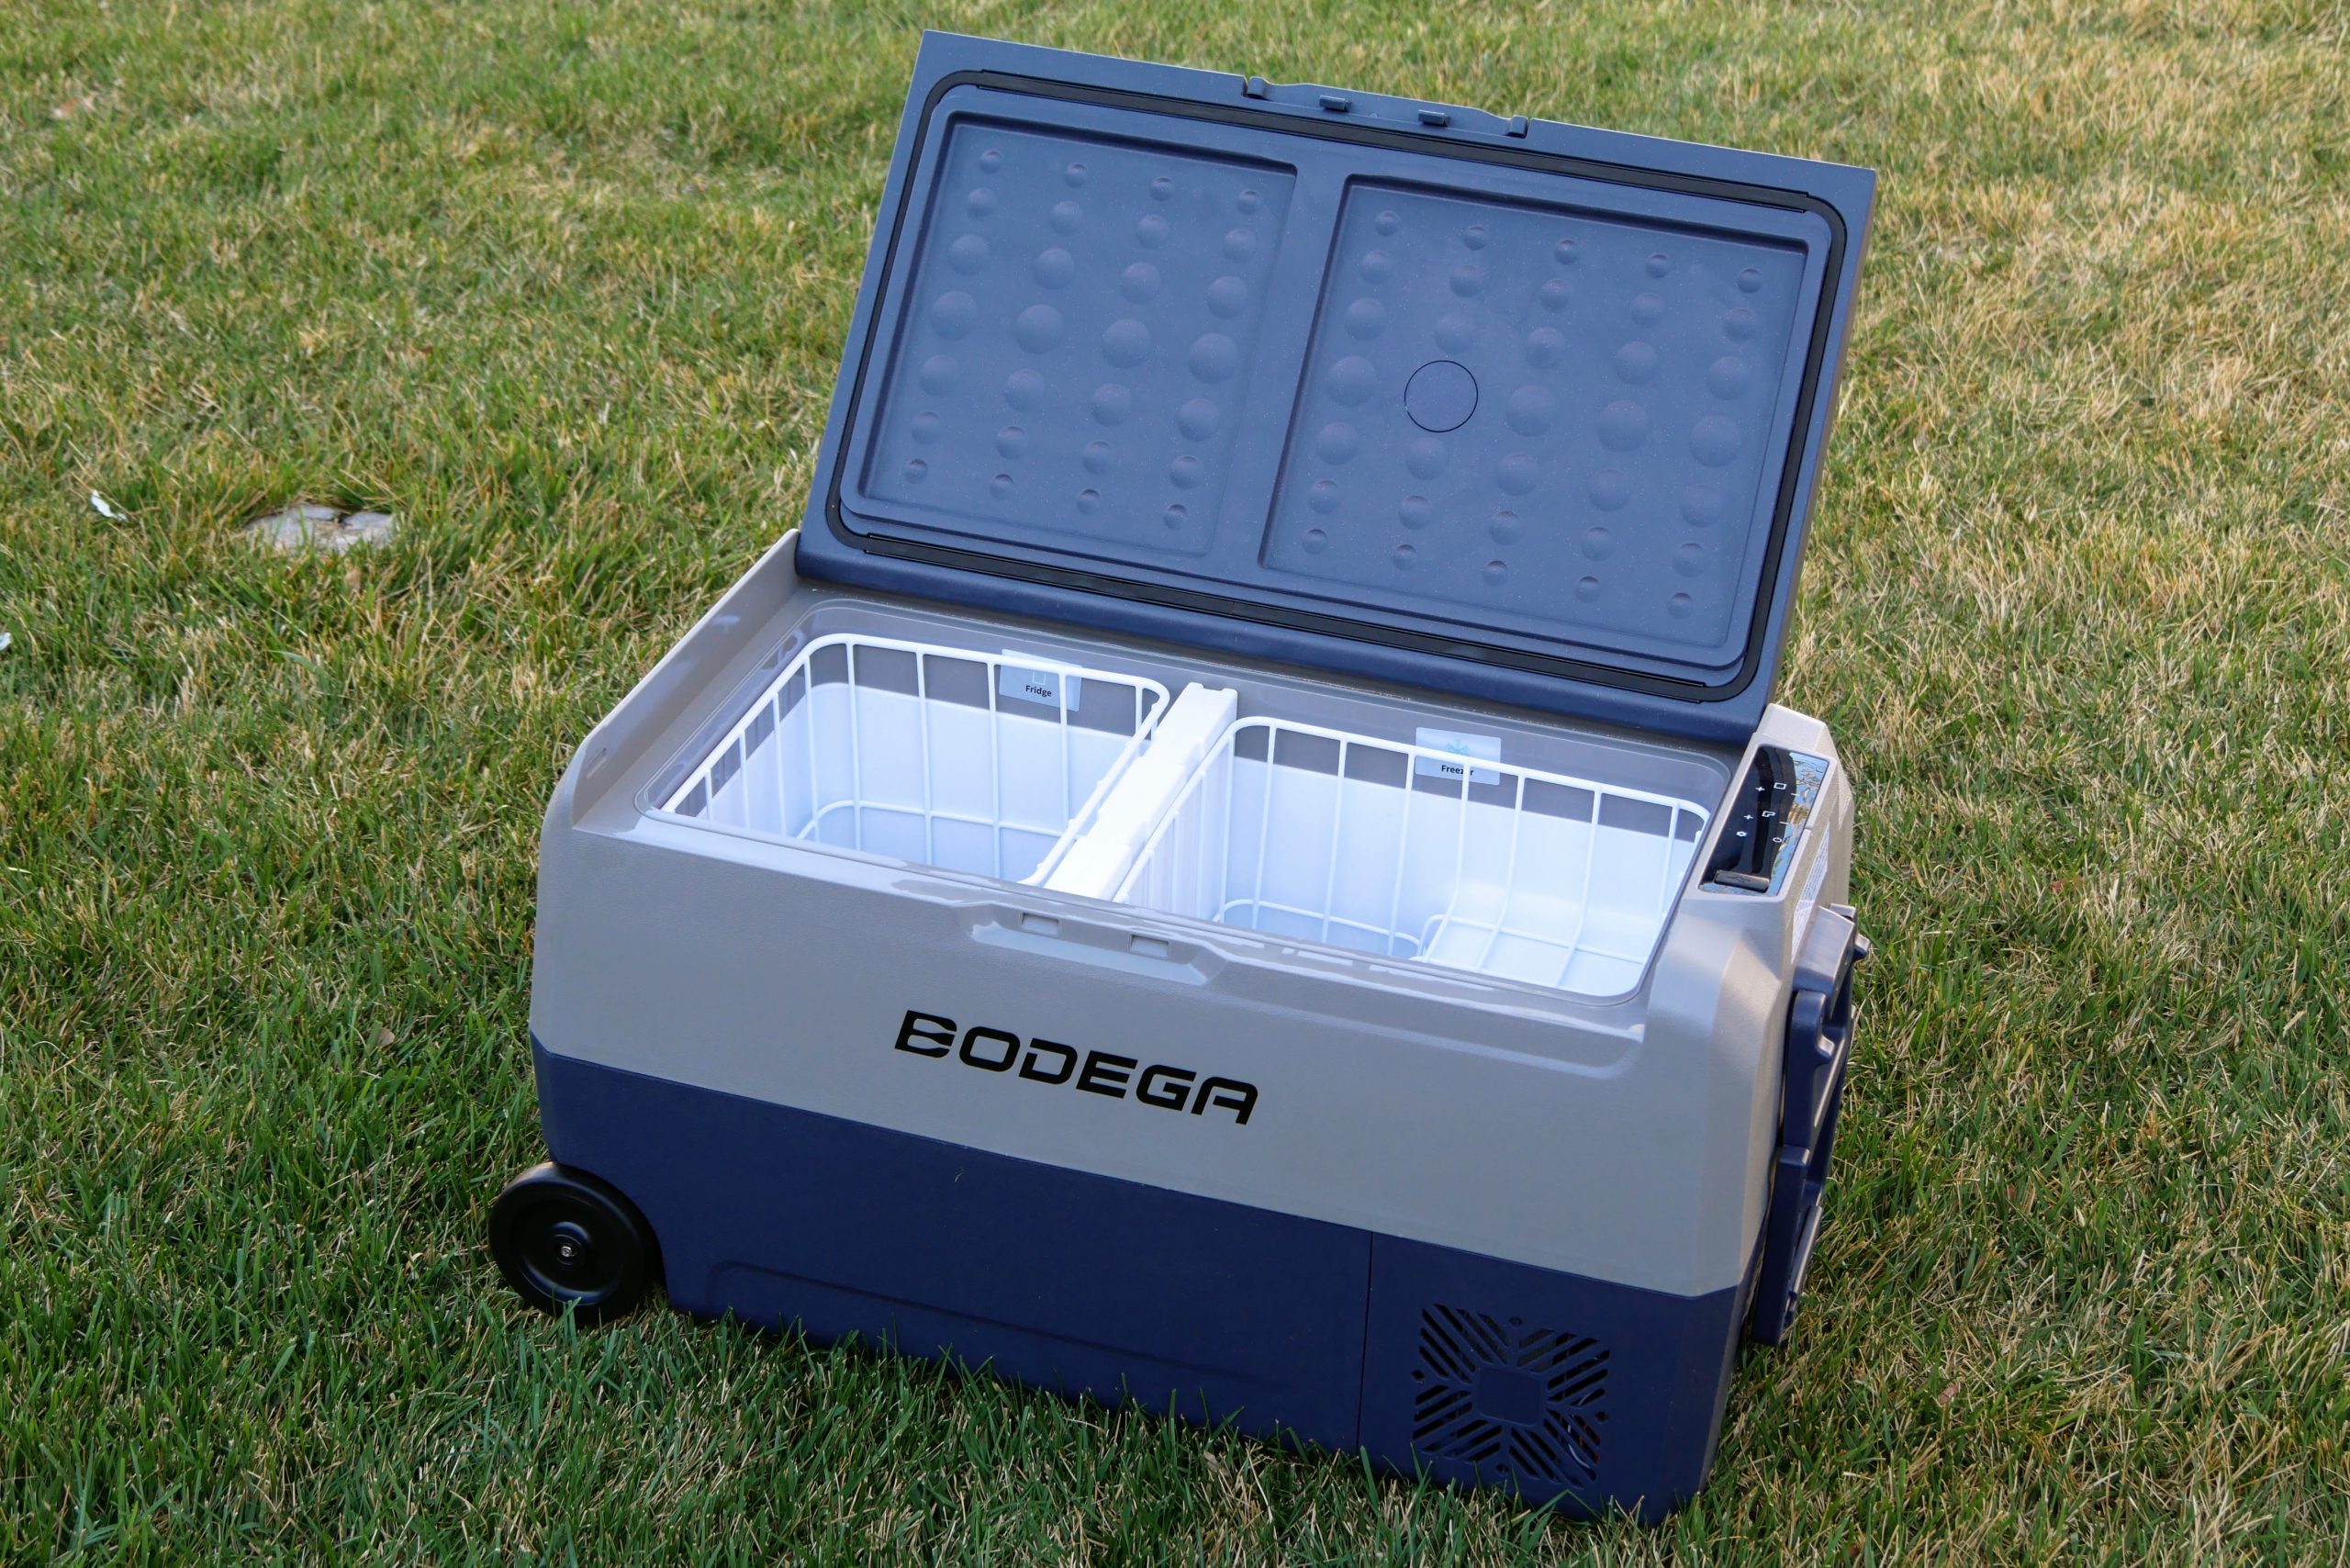 BODEGAcooler Accessories - Detachable Battery for 12v Portable Fridge